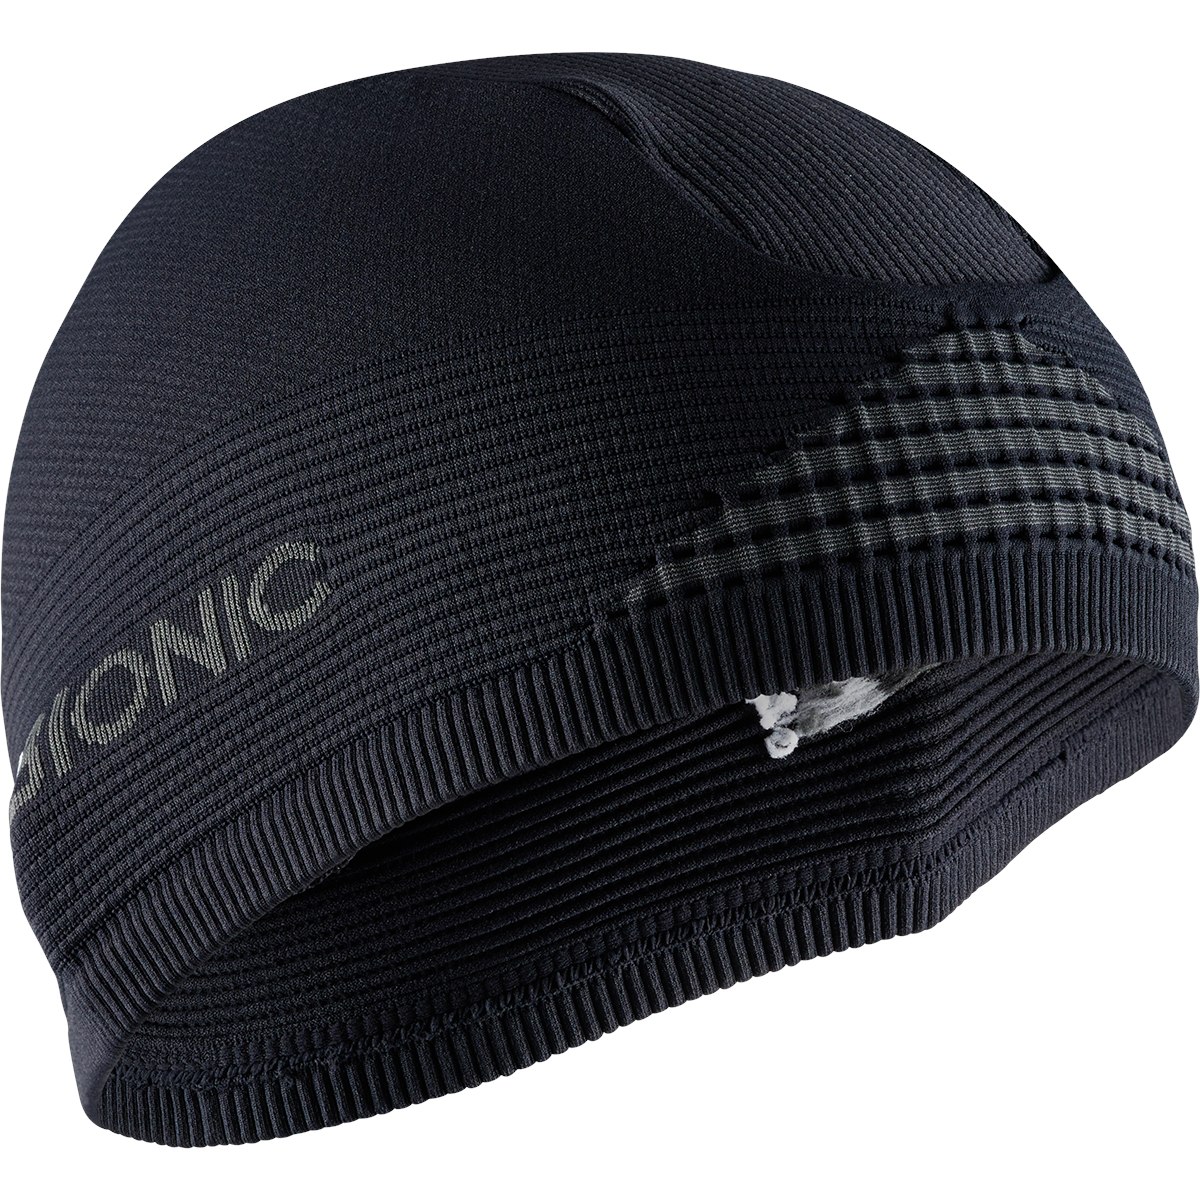 Bild von X-Bionic Helmet Cap Unterhelm - black/charcoal